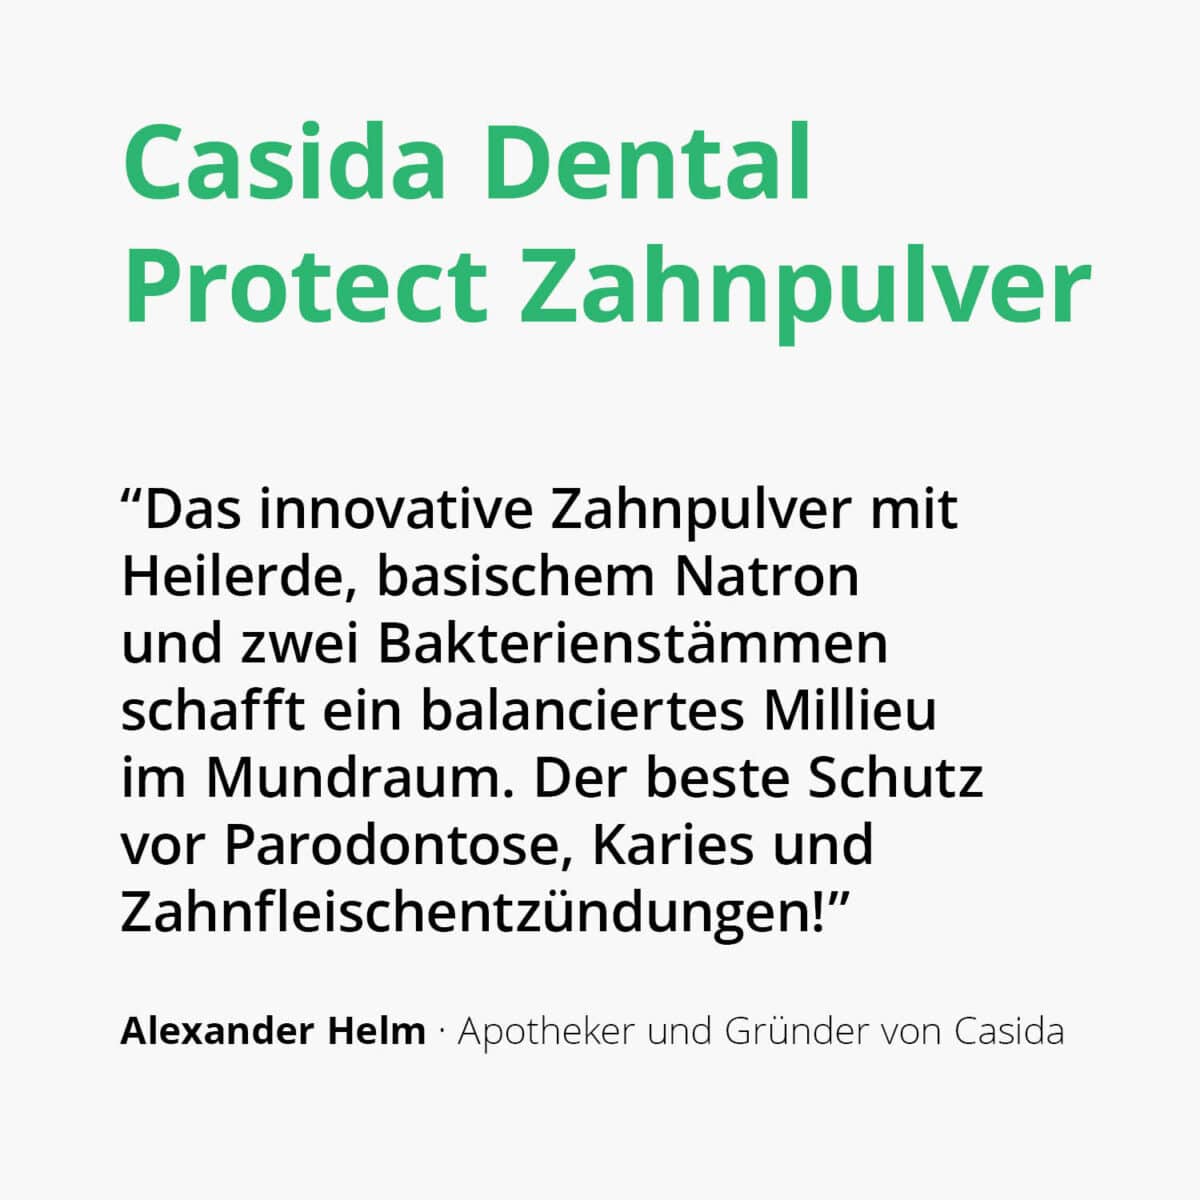 Dental Protect Zahnpulver